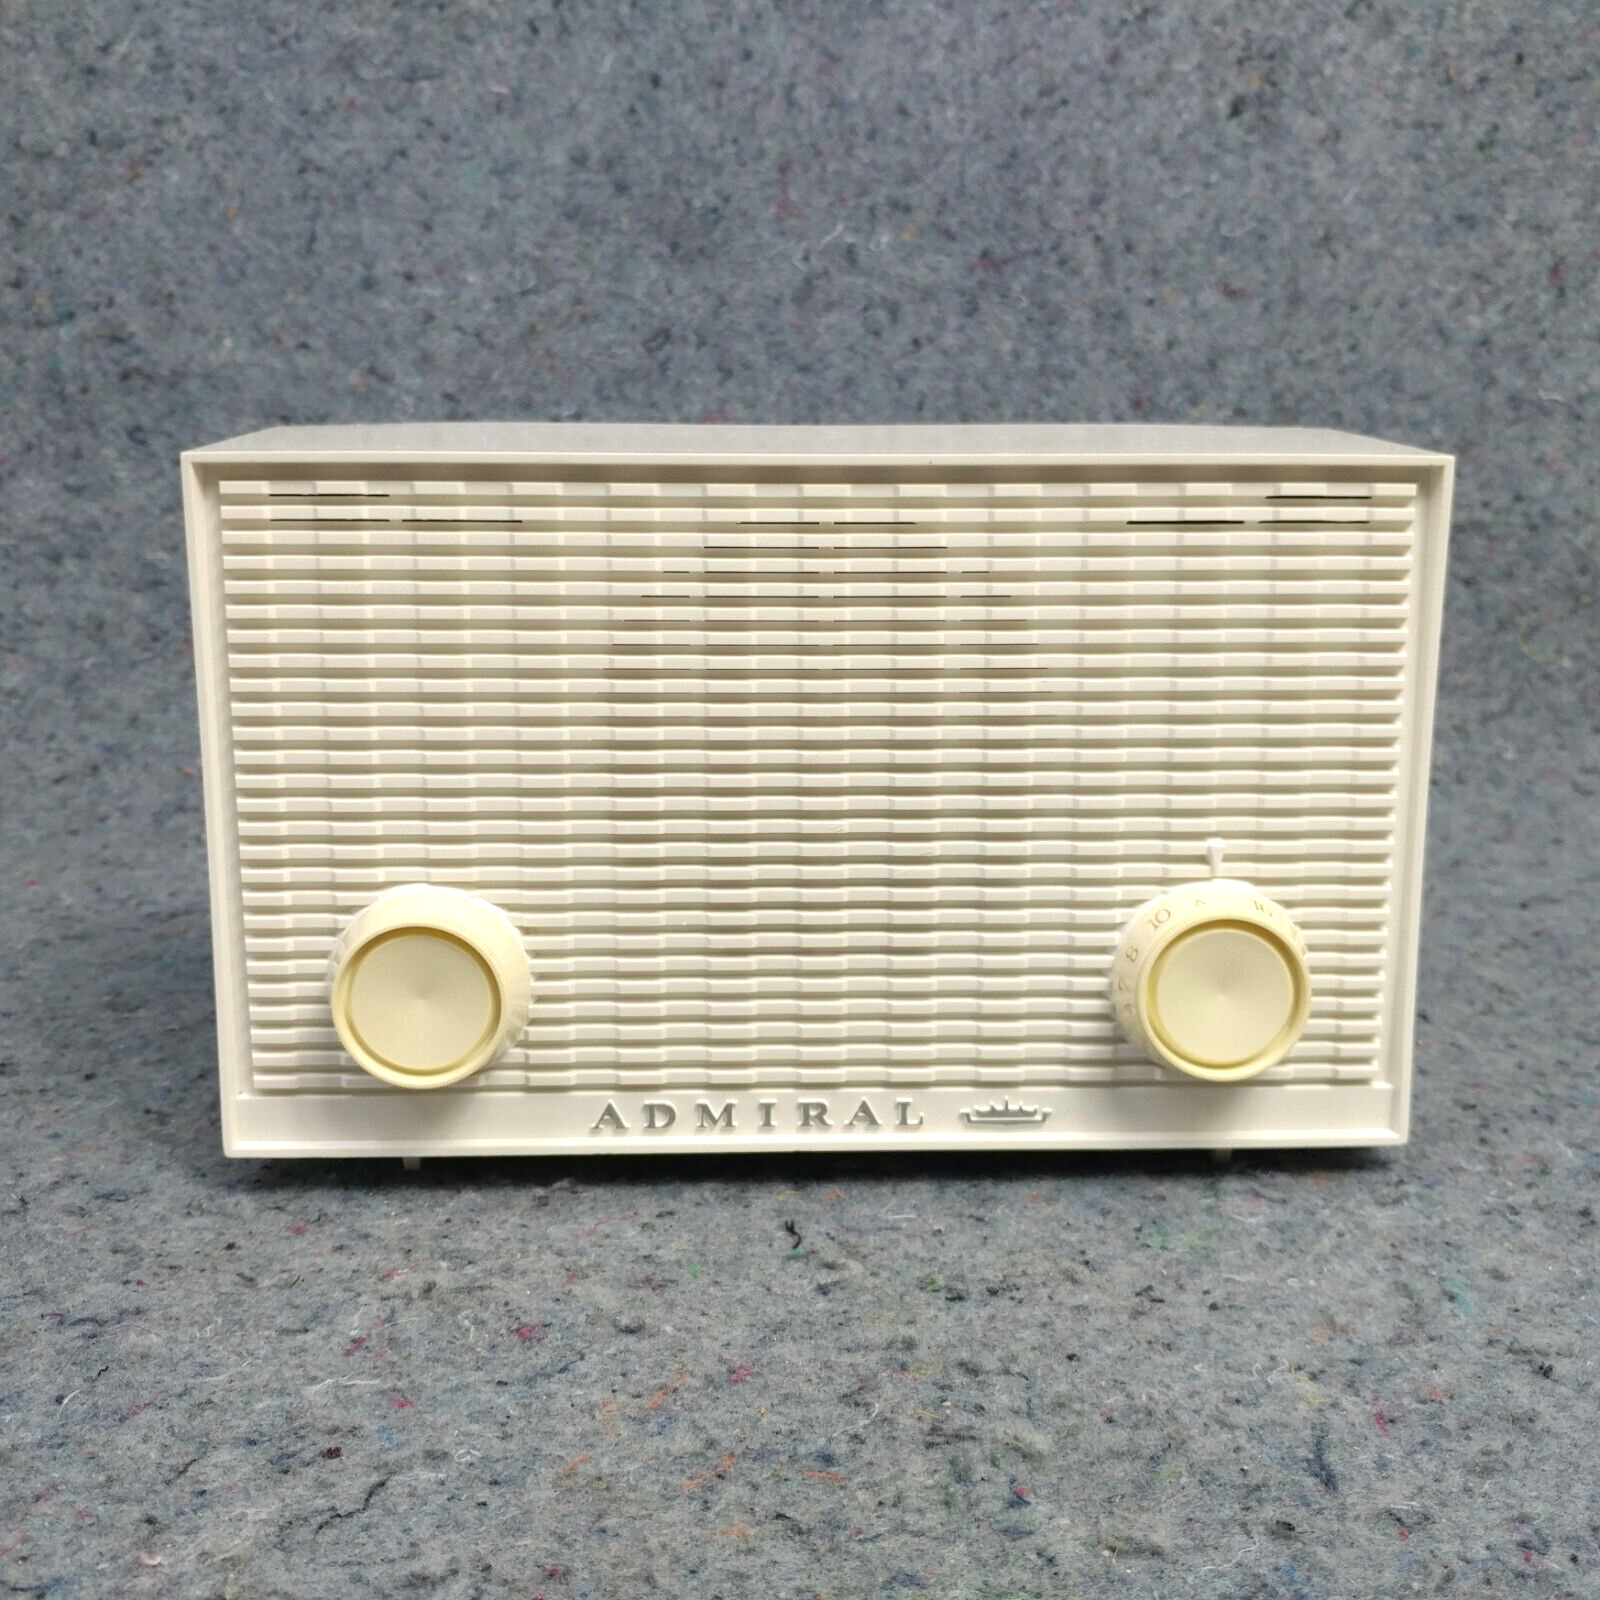 Admiral Tube Radio Model Y3503 AM White 1960's Vintage MCM Mid Century Modern